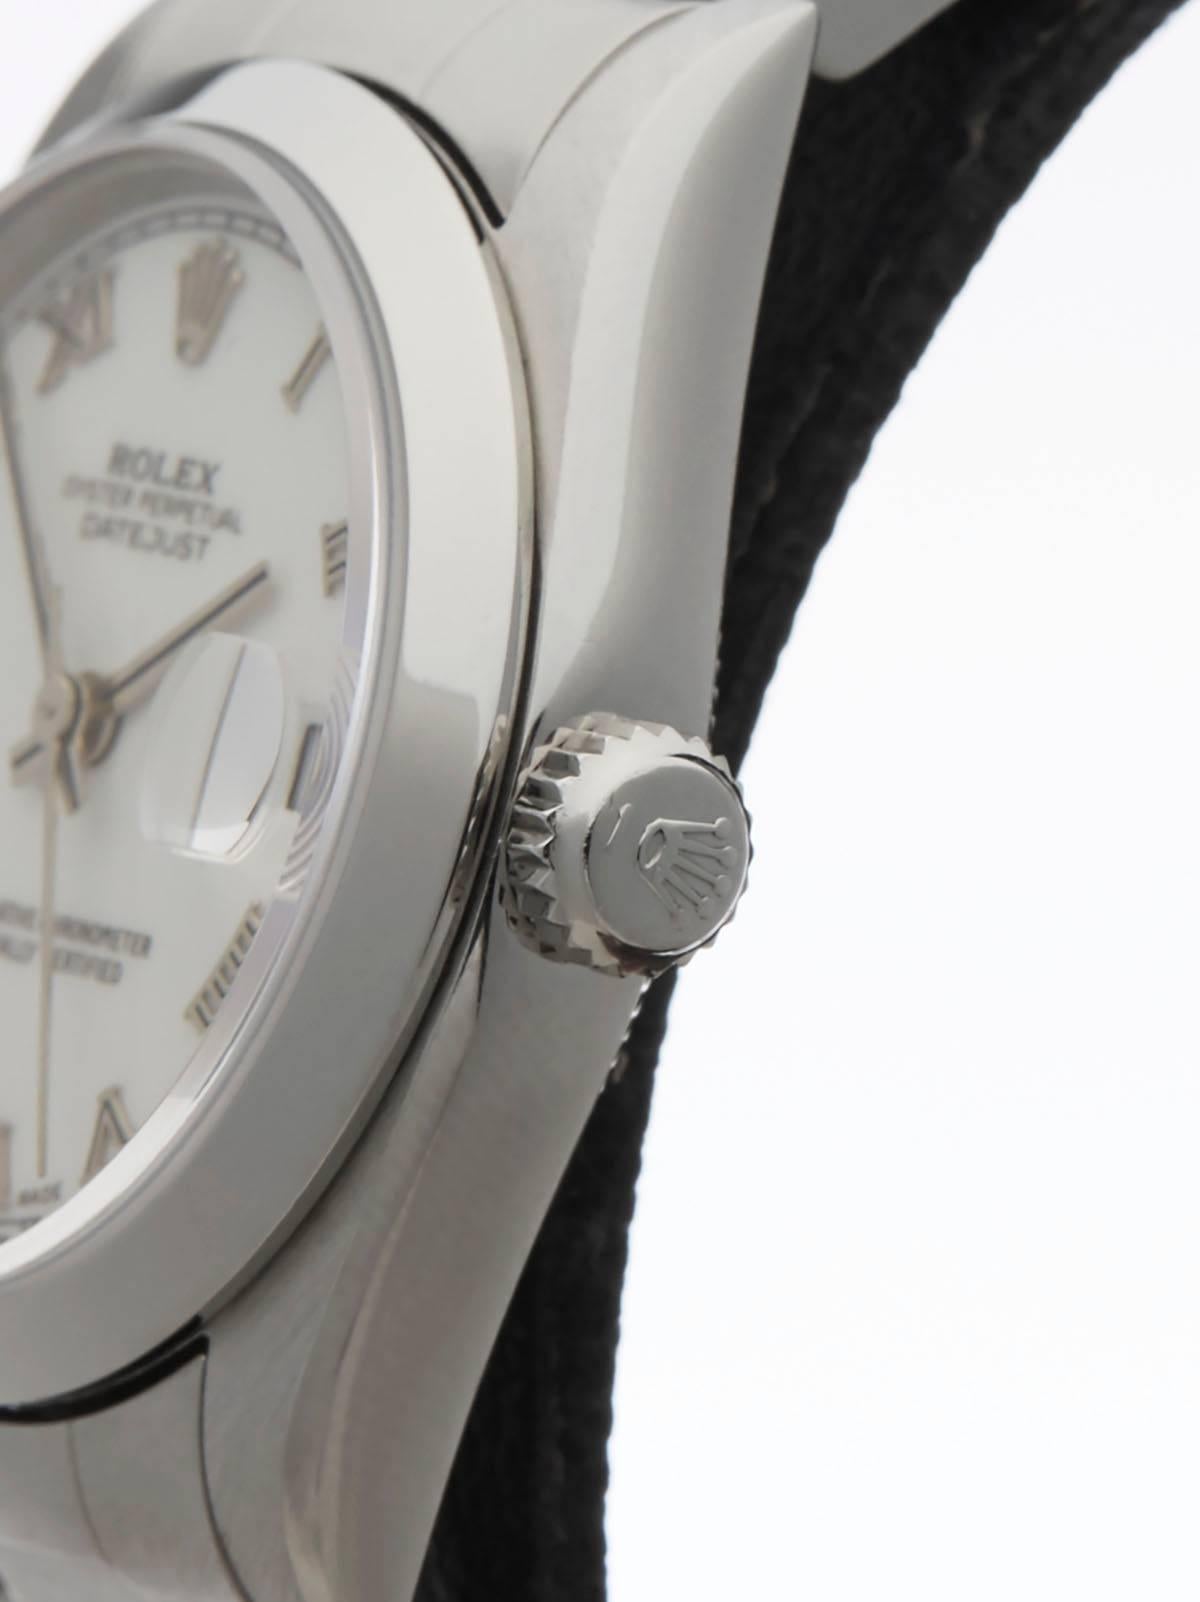 Rolex Ladies Stainless Steel Automatic Wrist Watch 1